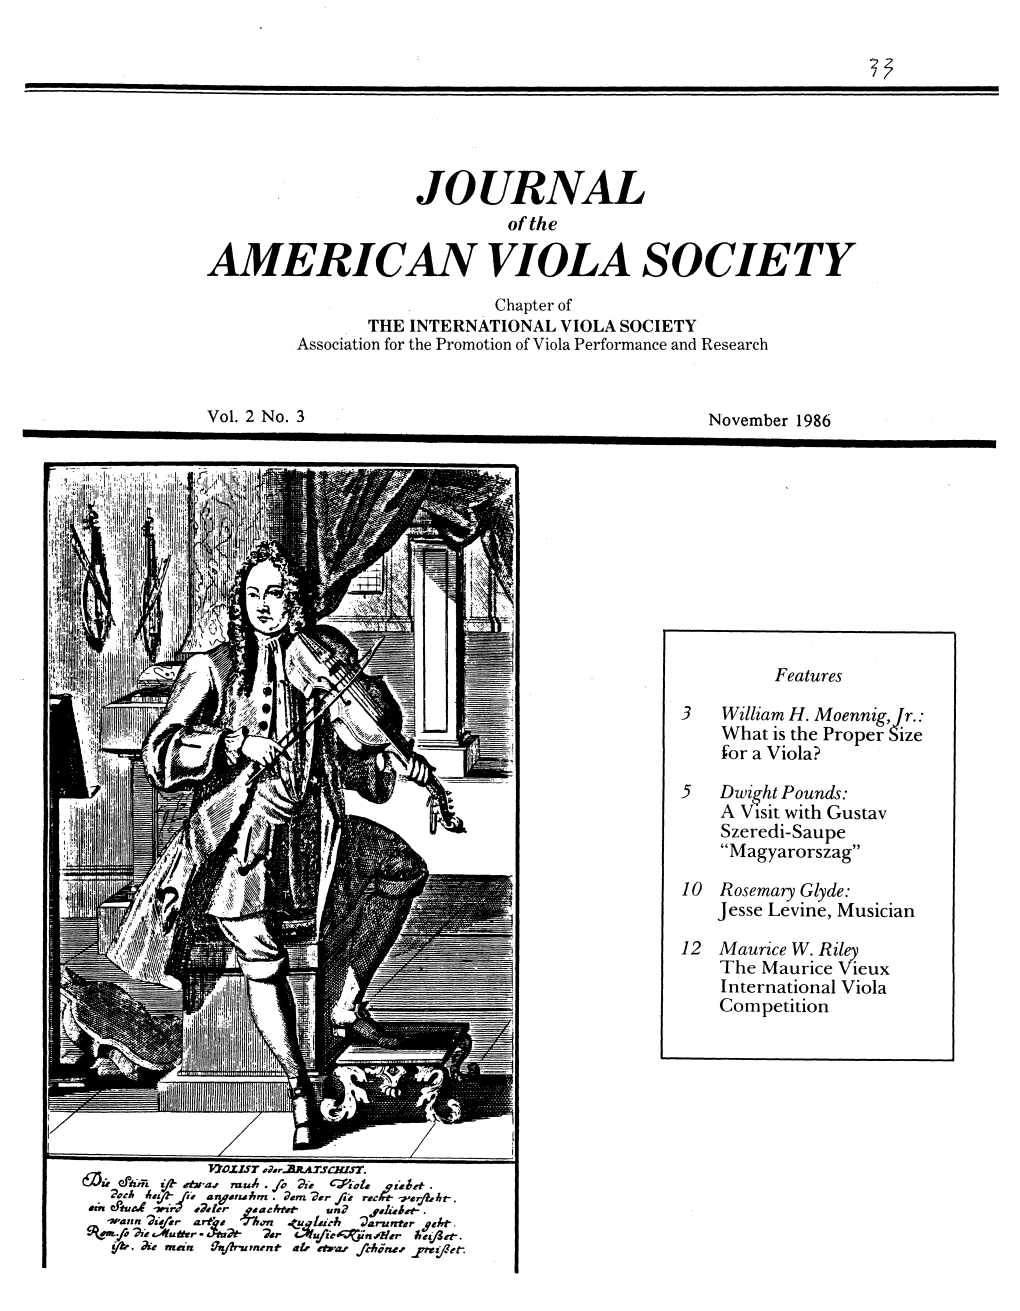 Journal of the American Viola Society Volume 2 No. 3, November 1986